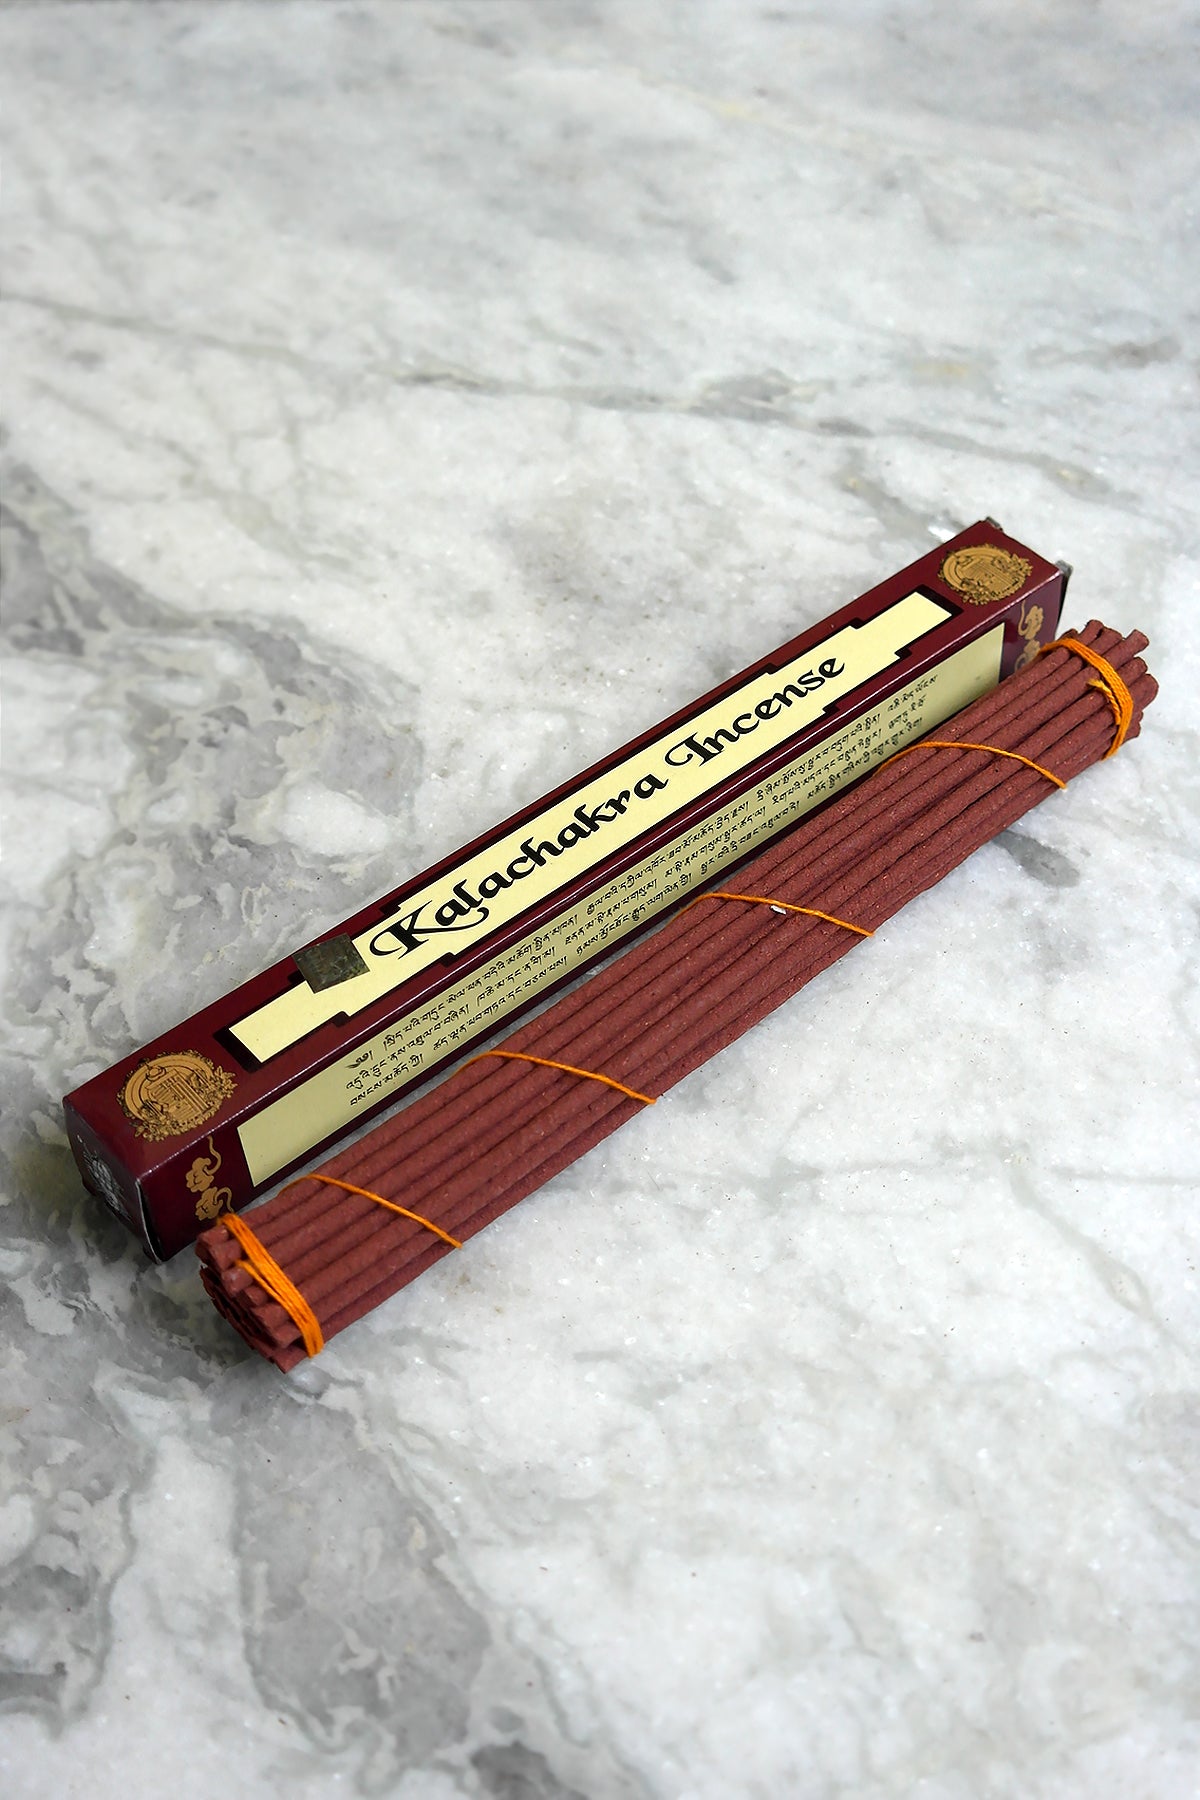 Tibetan Kalachakra traditional Incense Sticks, pure natural Tibetan incense